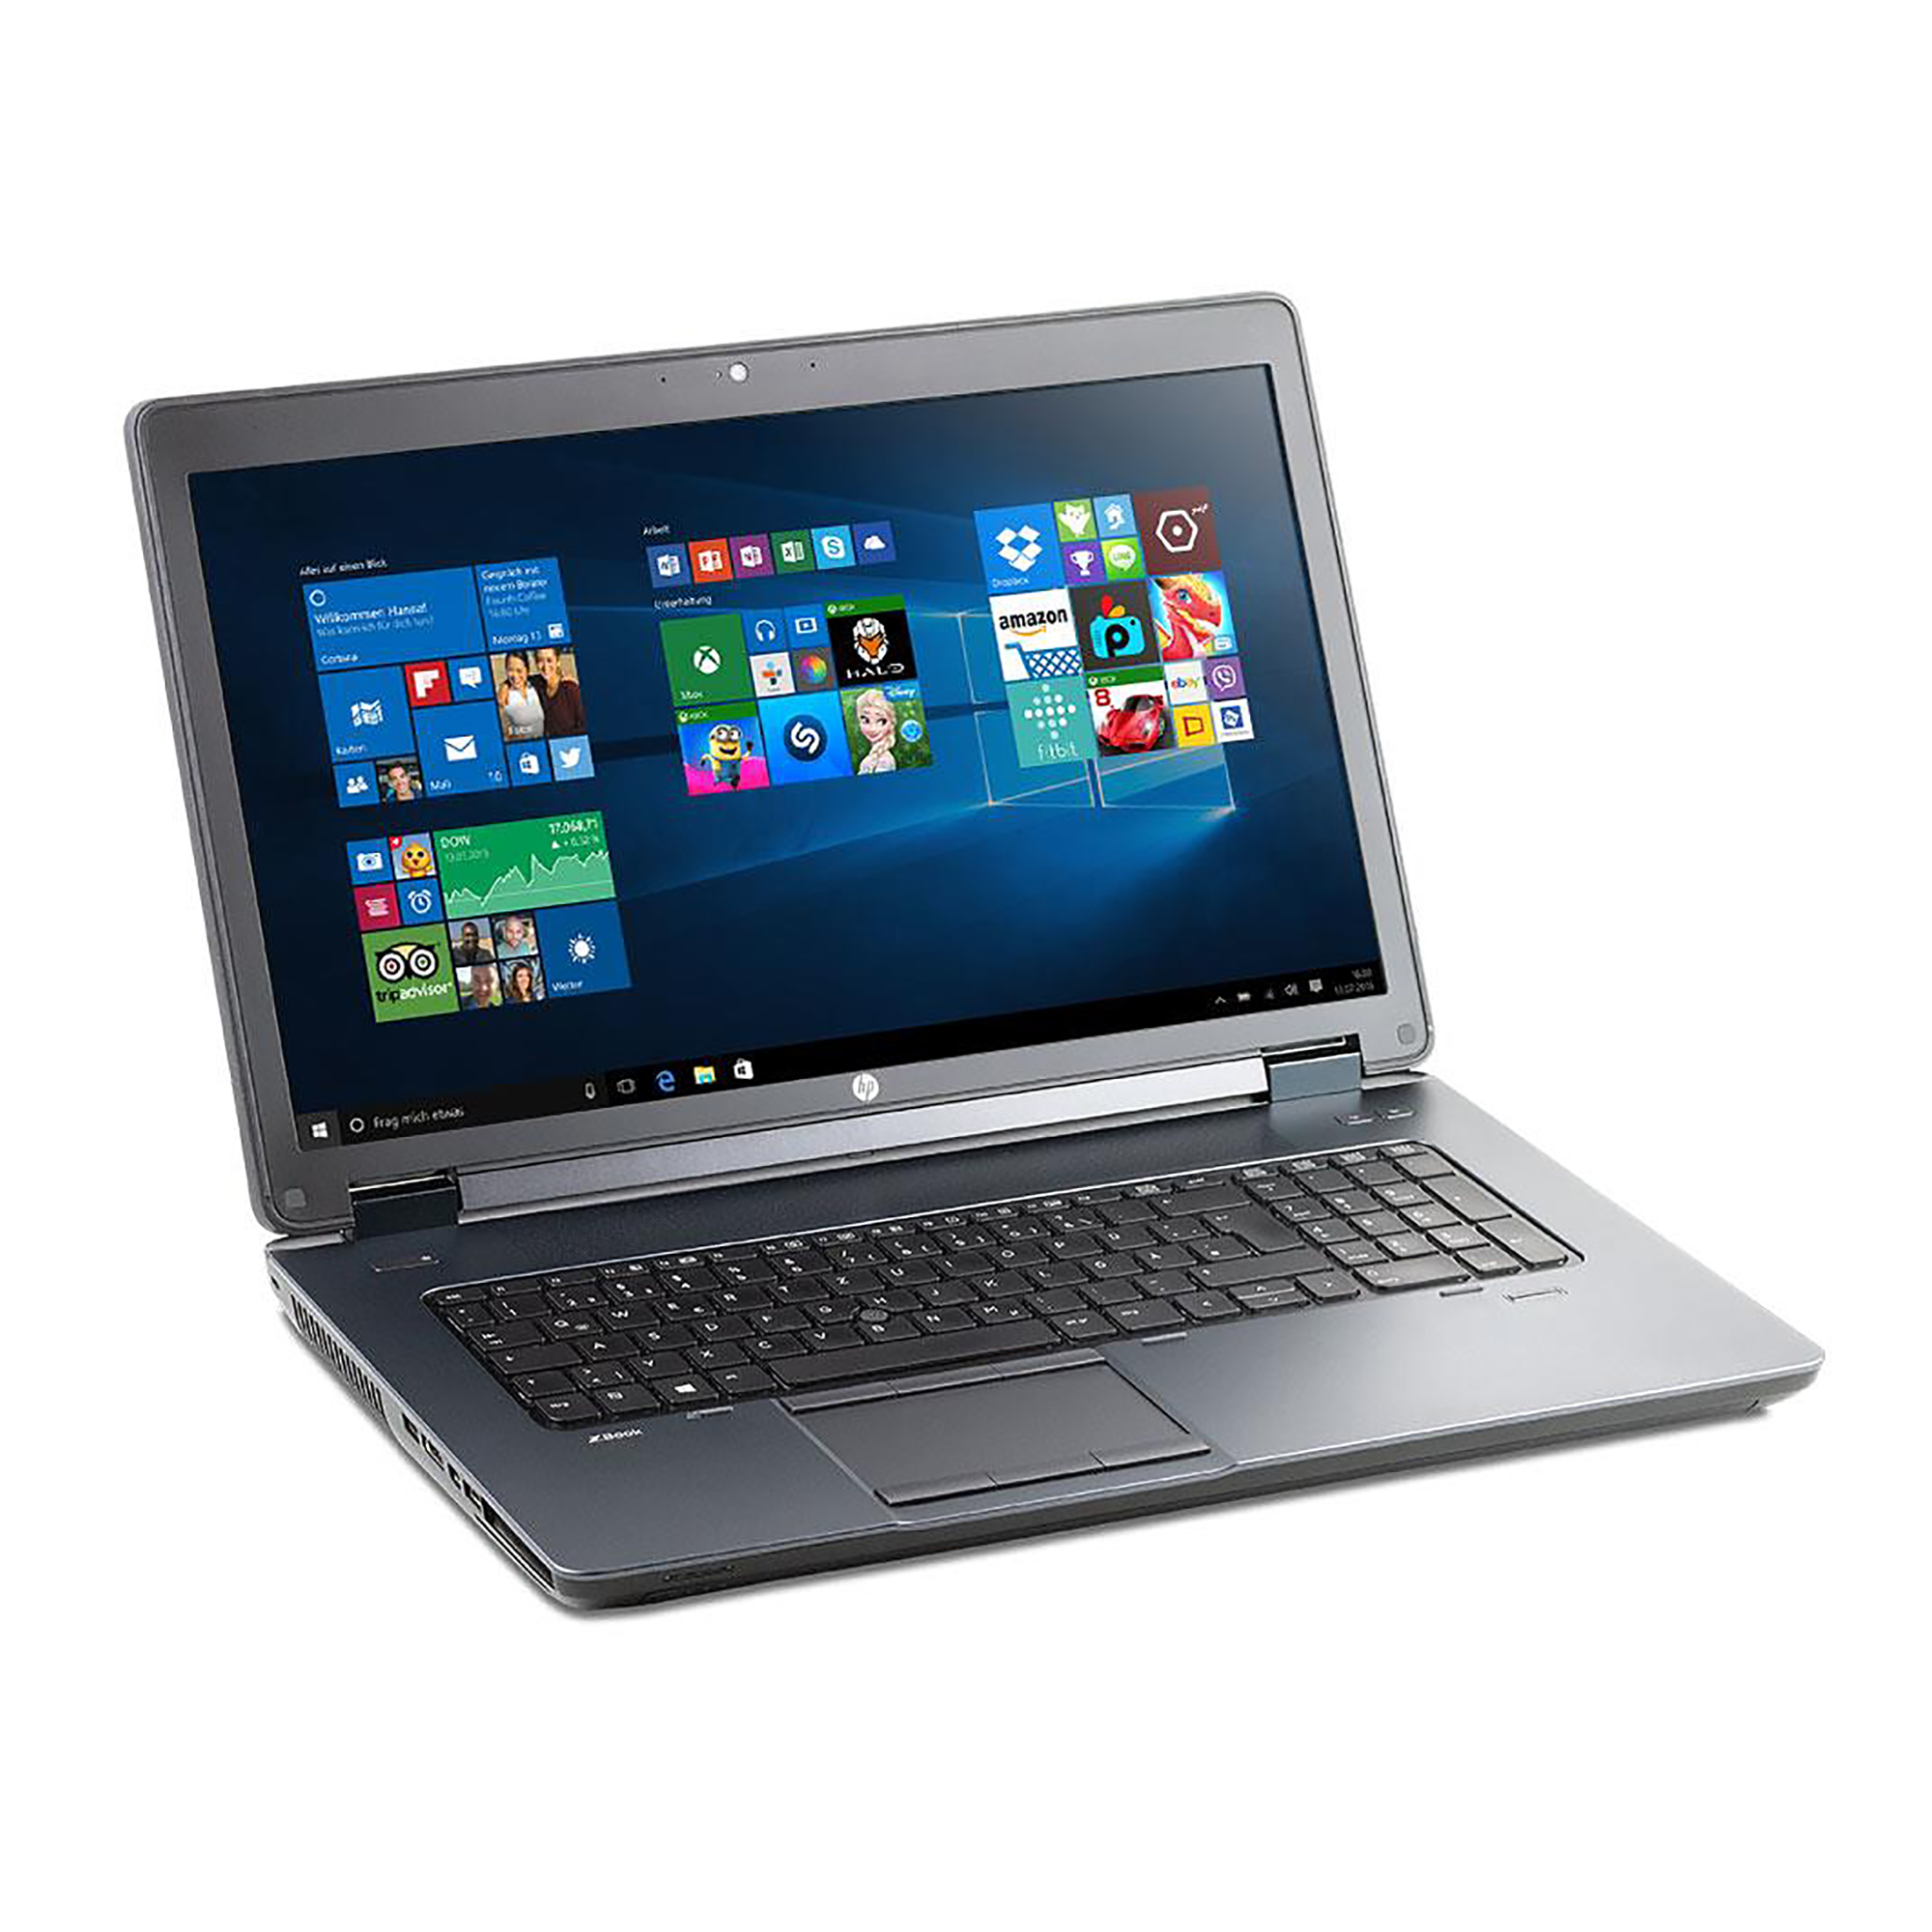 Used - HP ZBook 17 G2, 17.3" FHD Laptop, Intel Core i7-4710MQ @ 2.50 GHz, 16GB DDR4, 250GB HDD, DVD-RW, Bluetooth, Webcam, Win10 Home 64 - image 2 of 4